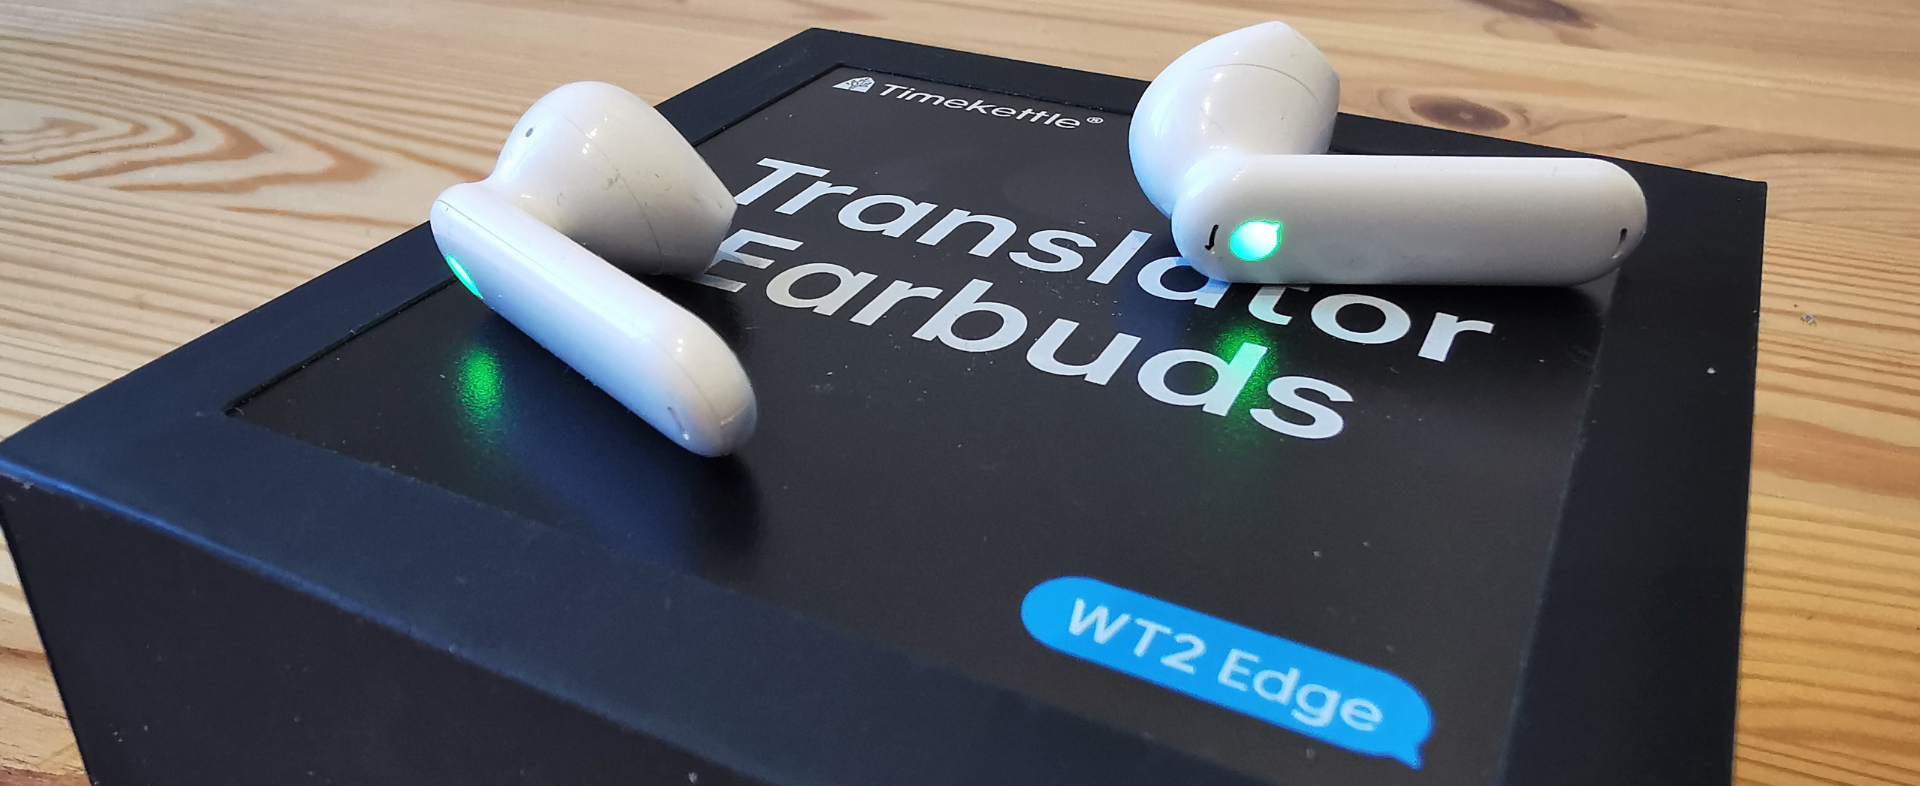 TimeKettle WT2 Edge AI Translator Earbuds review